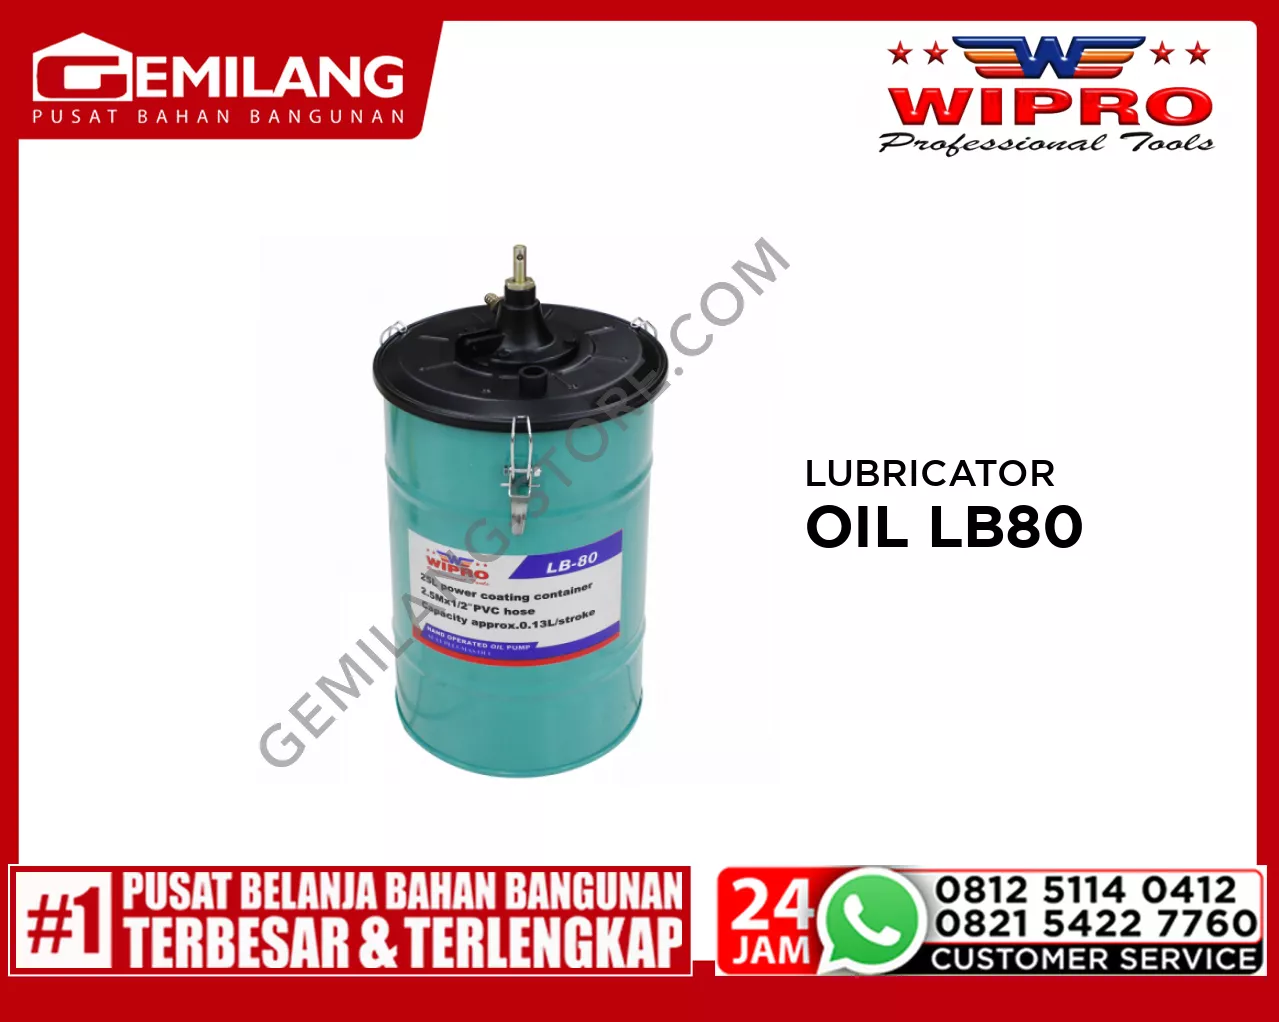 WIPRO LUBRICATOR OIL LB80